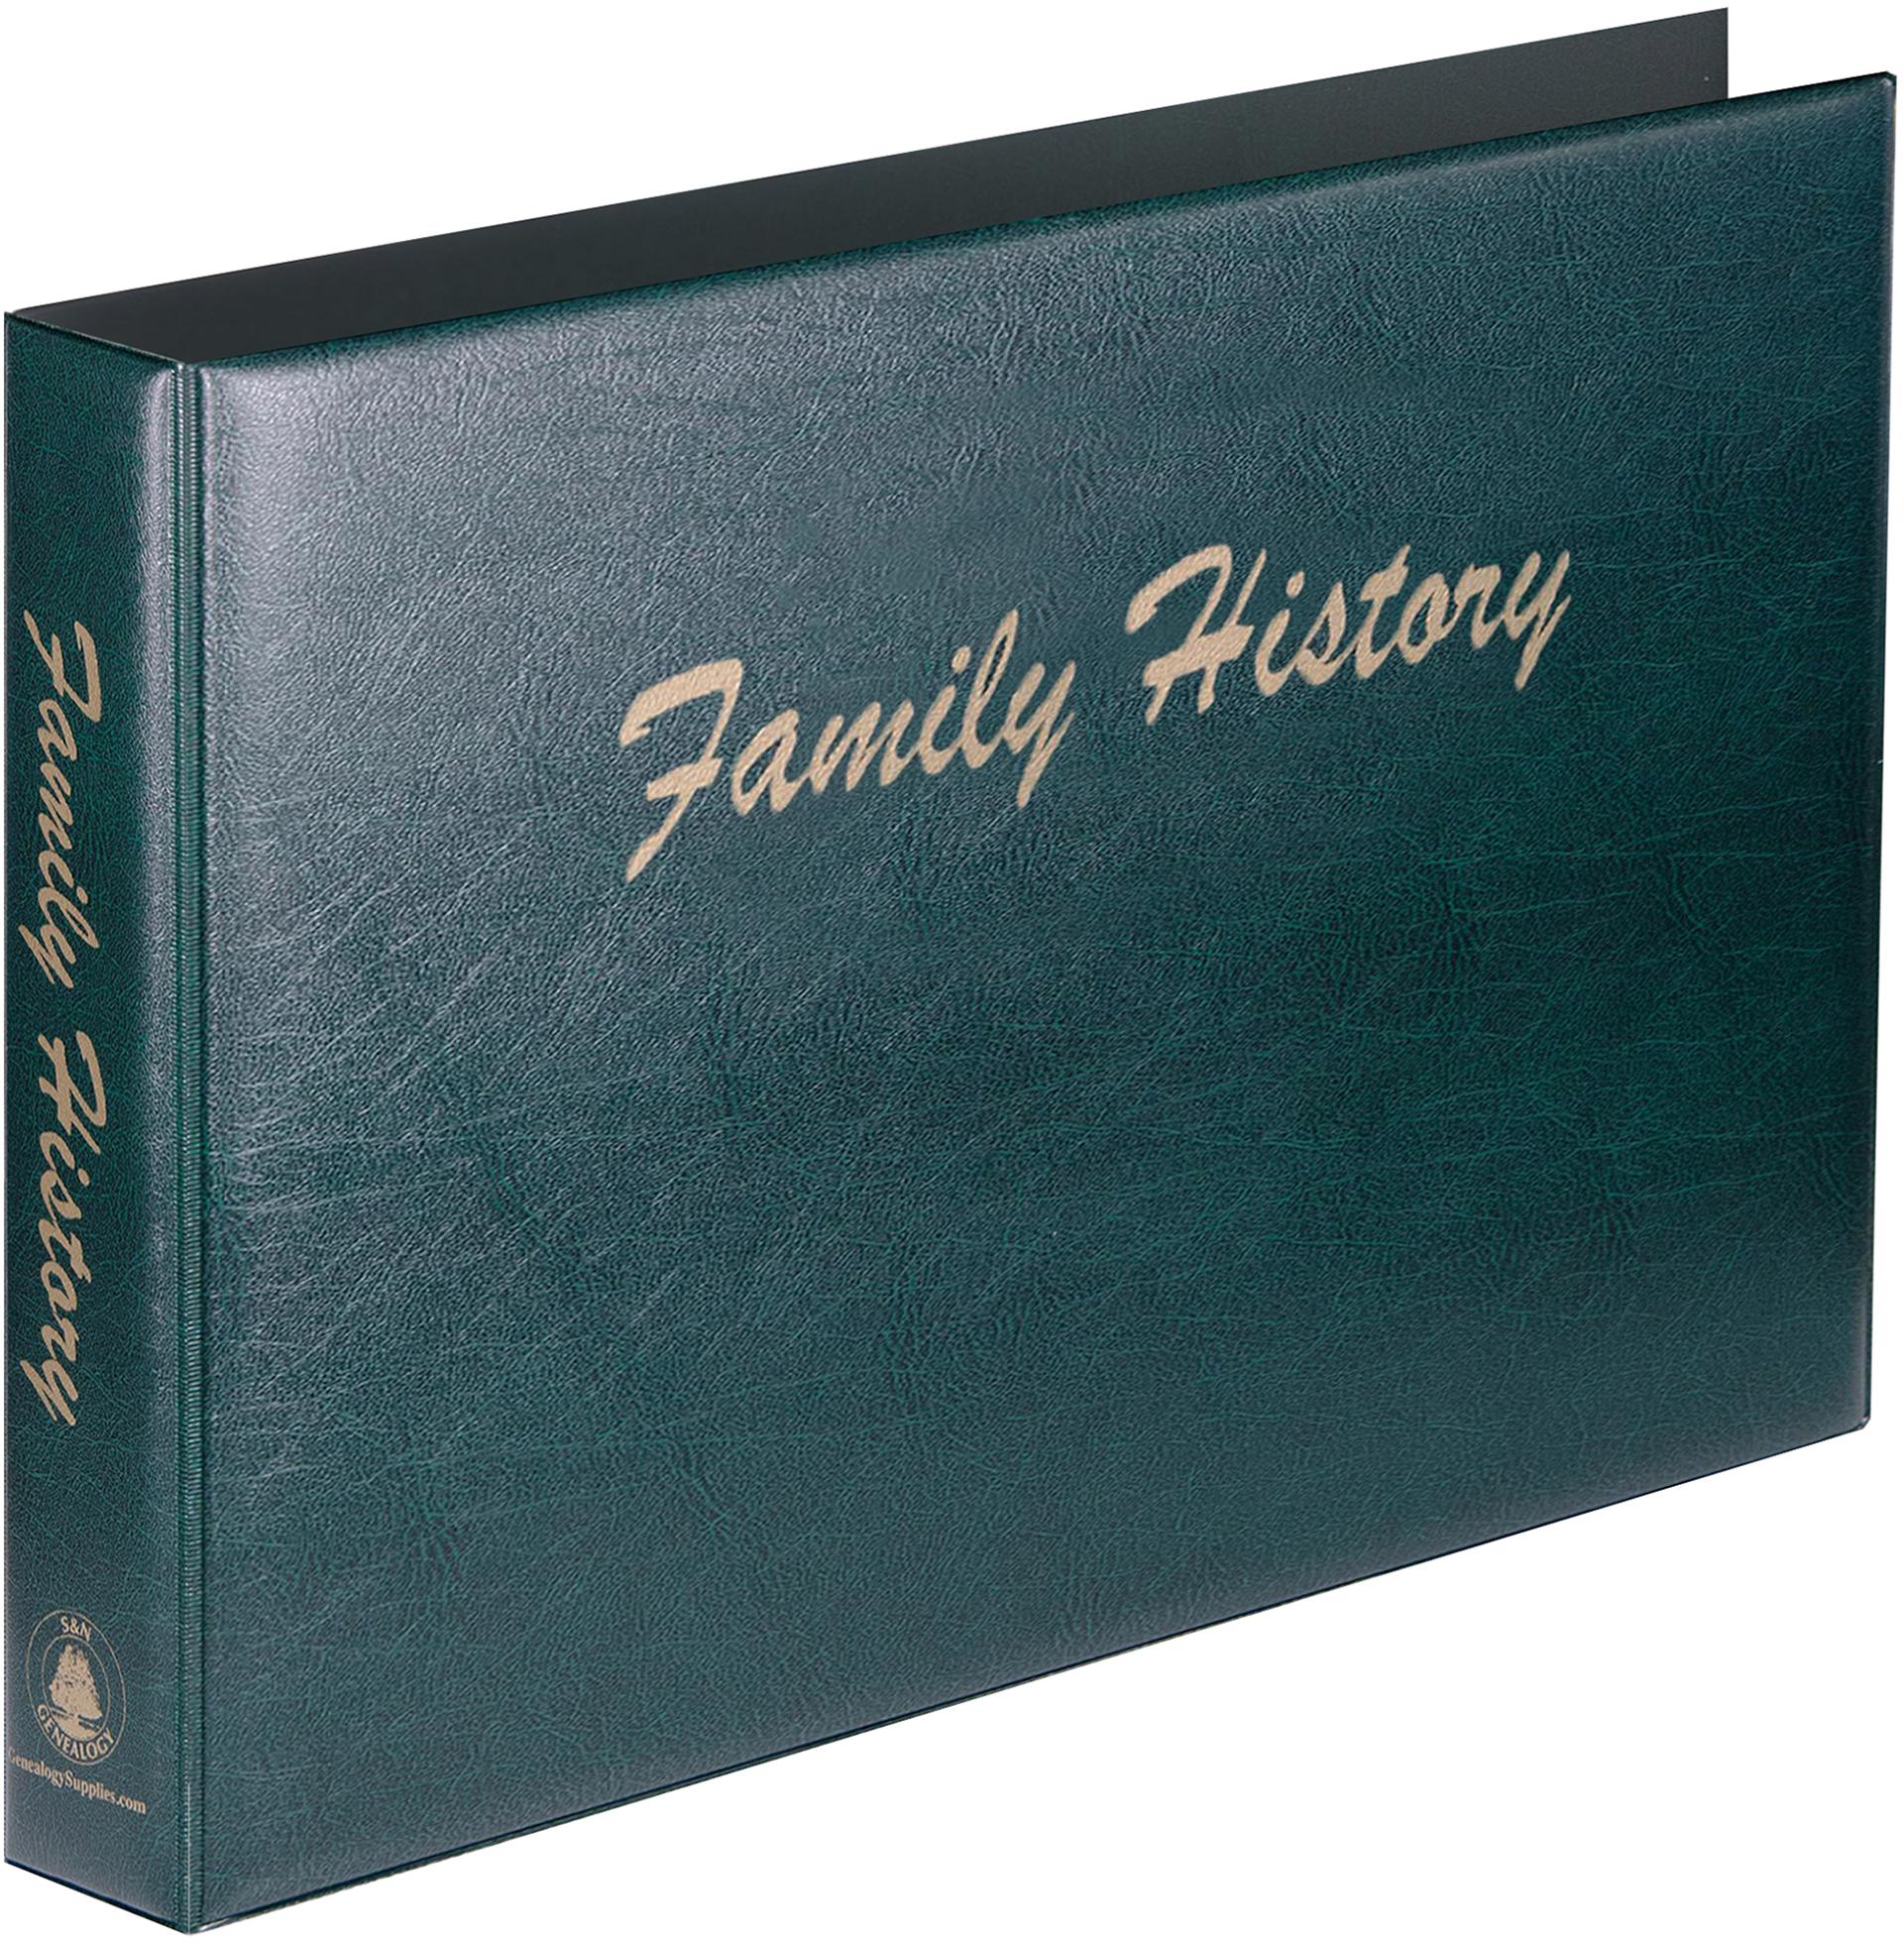 S&N Genealogy Supplies added a - S&N Genealogy Supplies